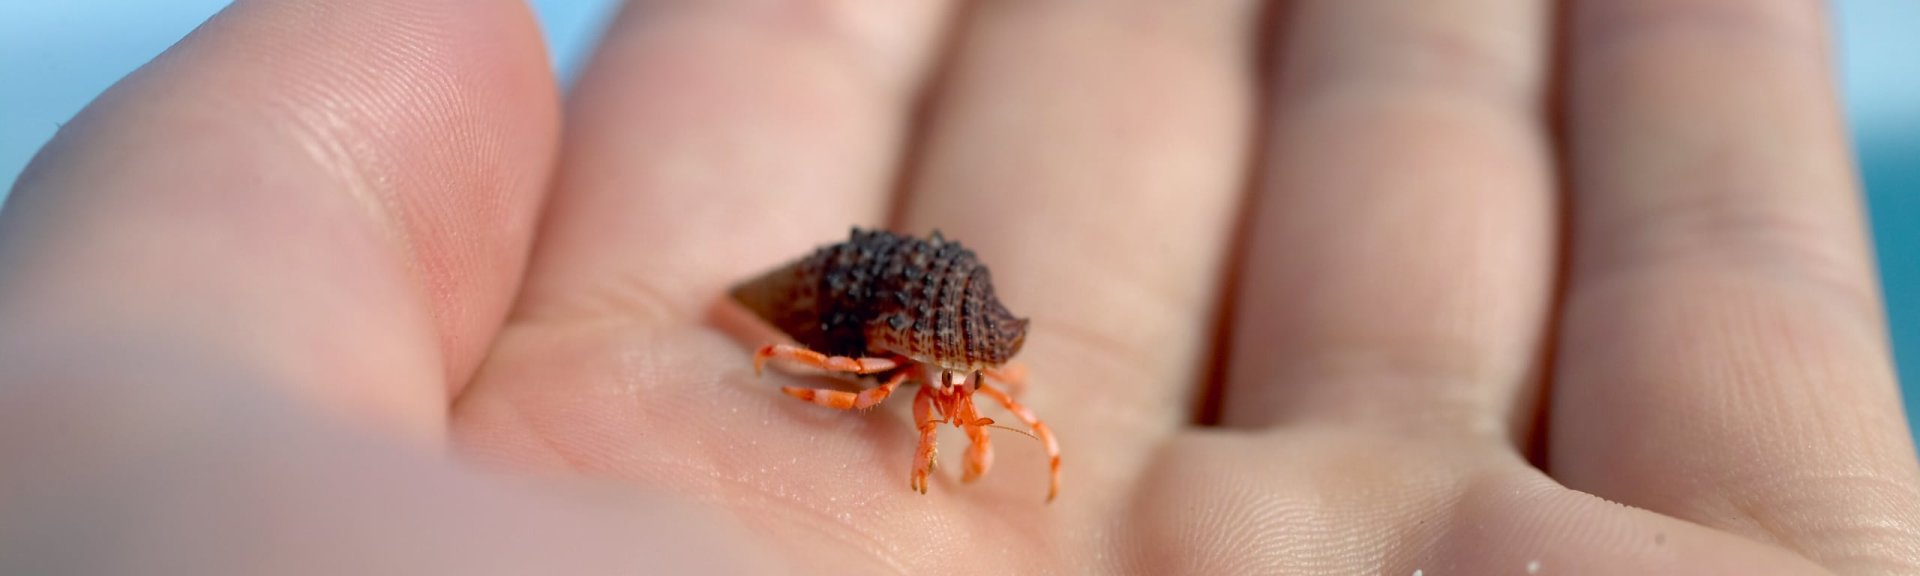 Baby hermit crab, credit parks australia.